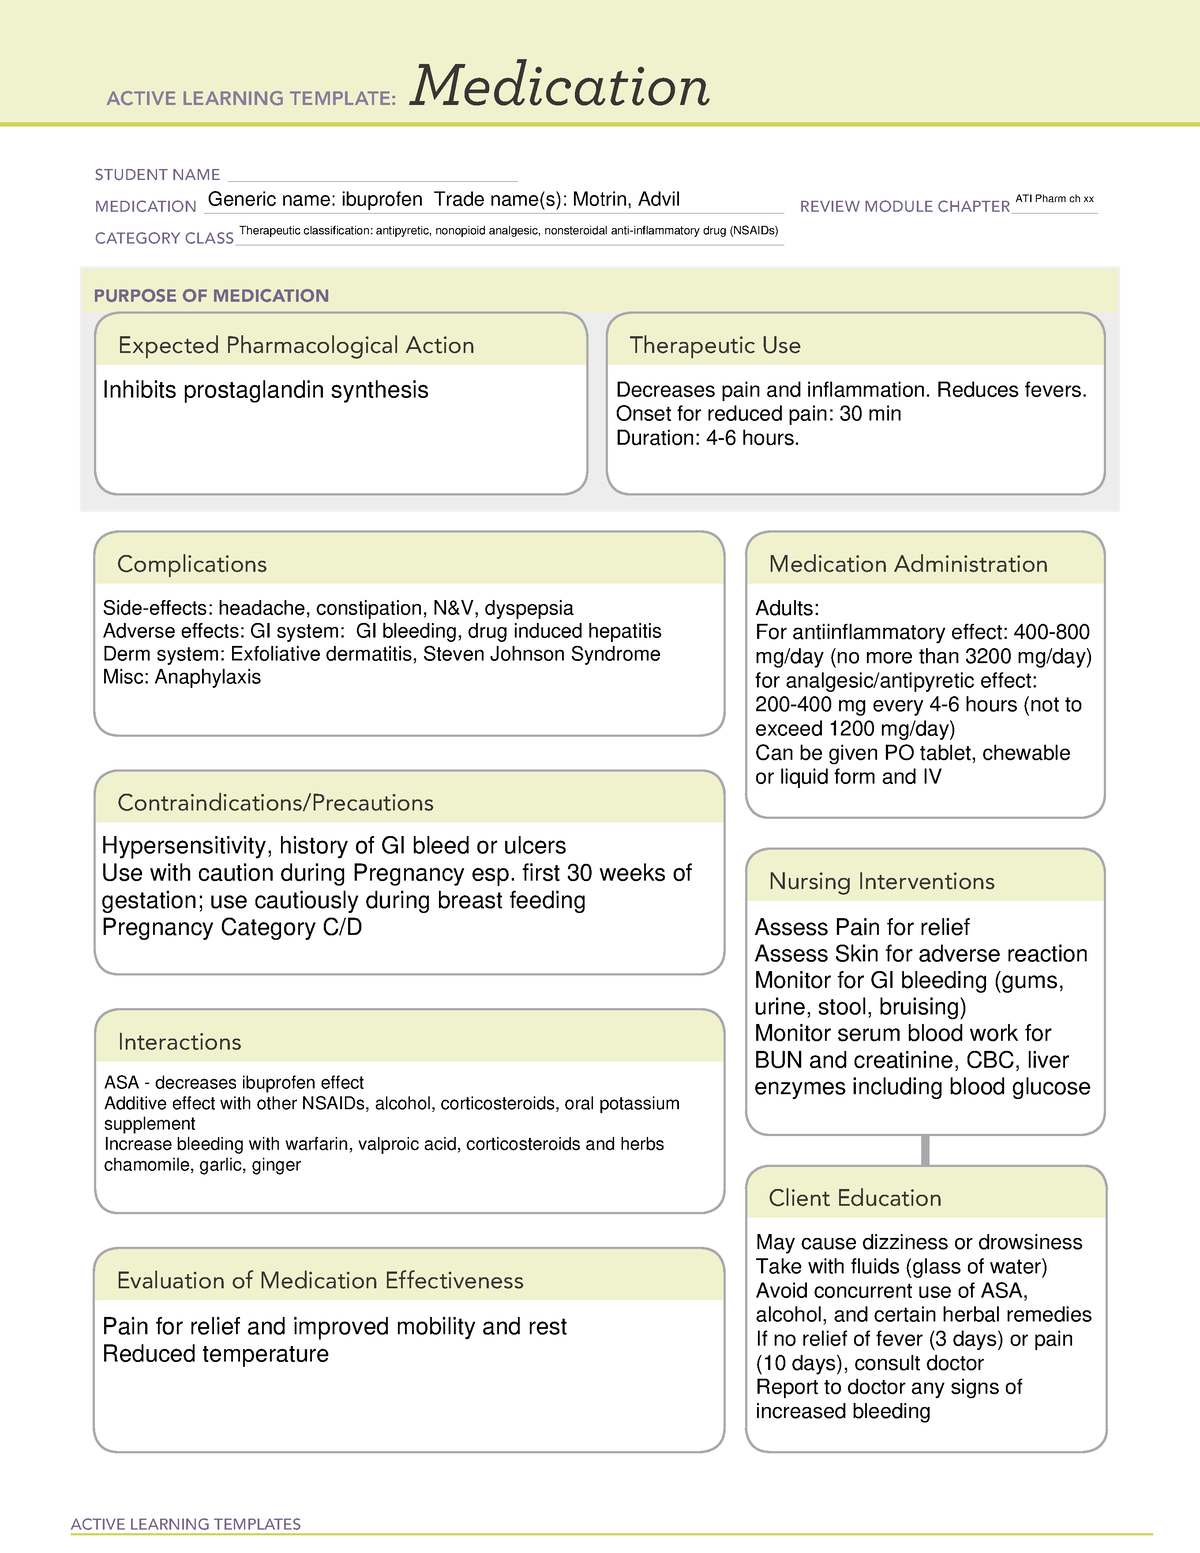 ATI Medication Worksheet for ibuprofen ACTIVE LEARNING TEMPLATES